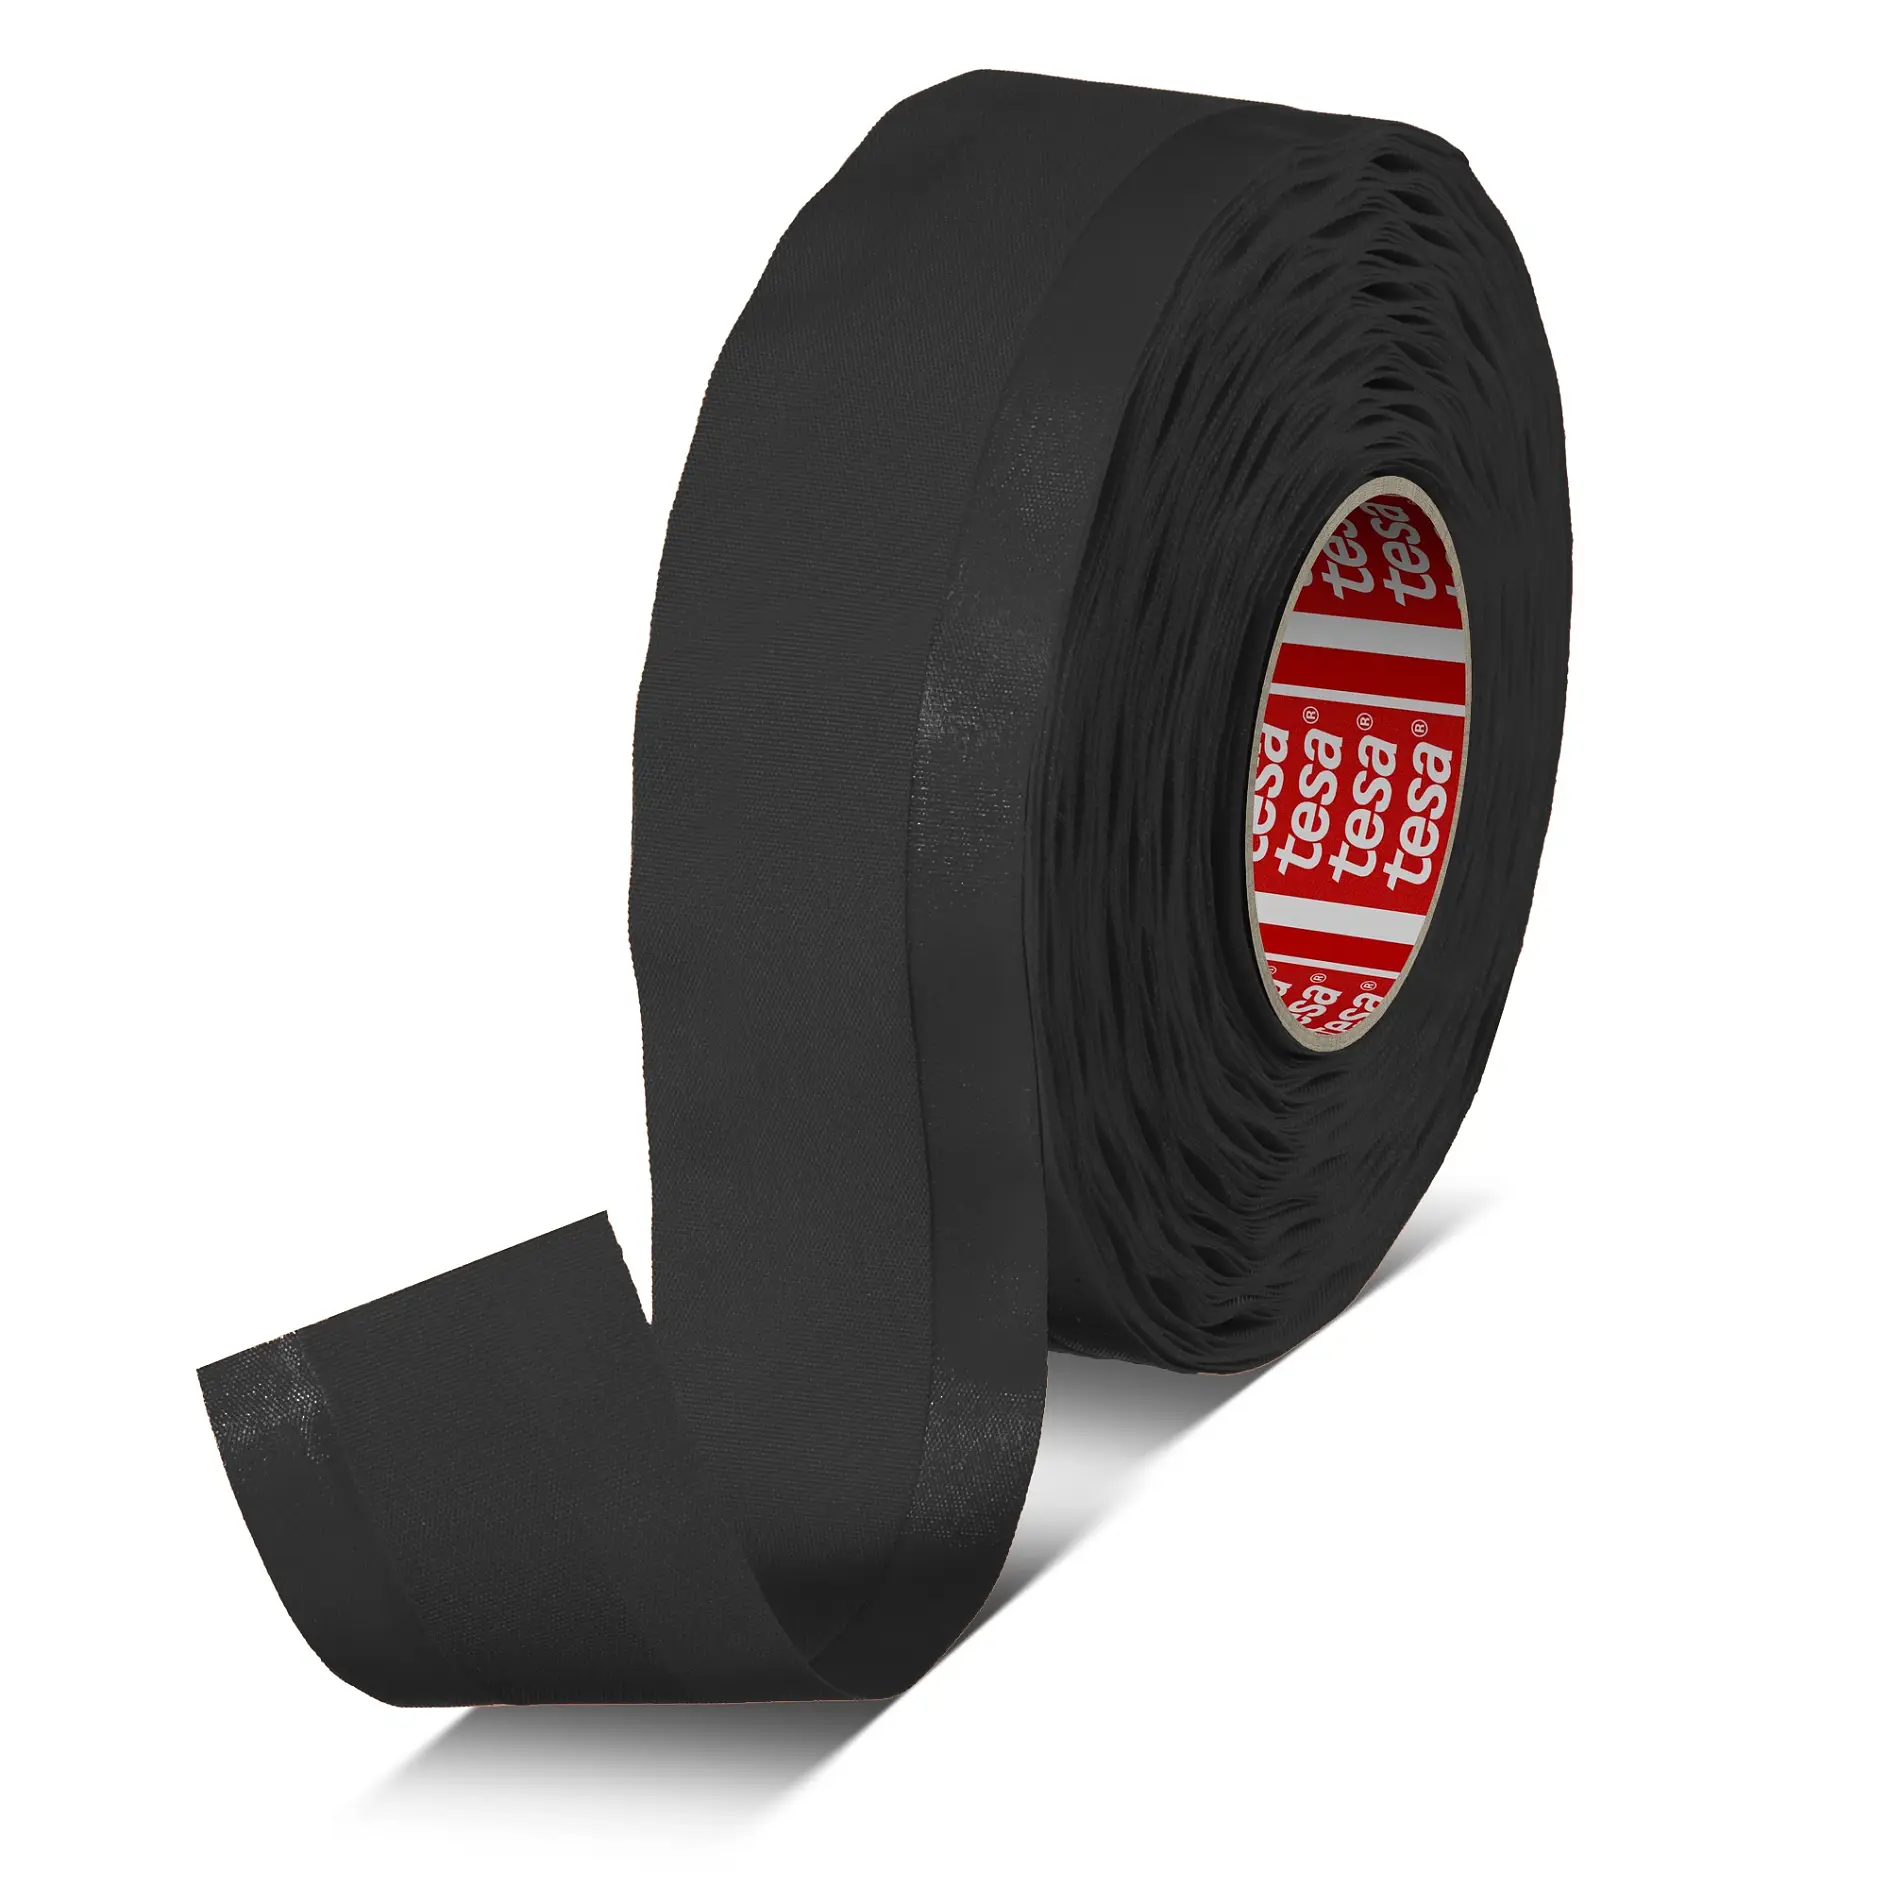 tesa-51036-PV5-wire-harnessing-sleeve Photoshopped Black